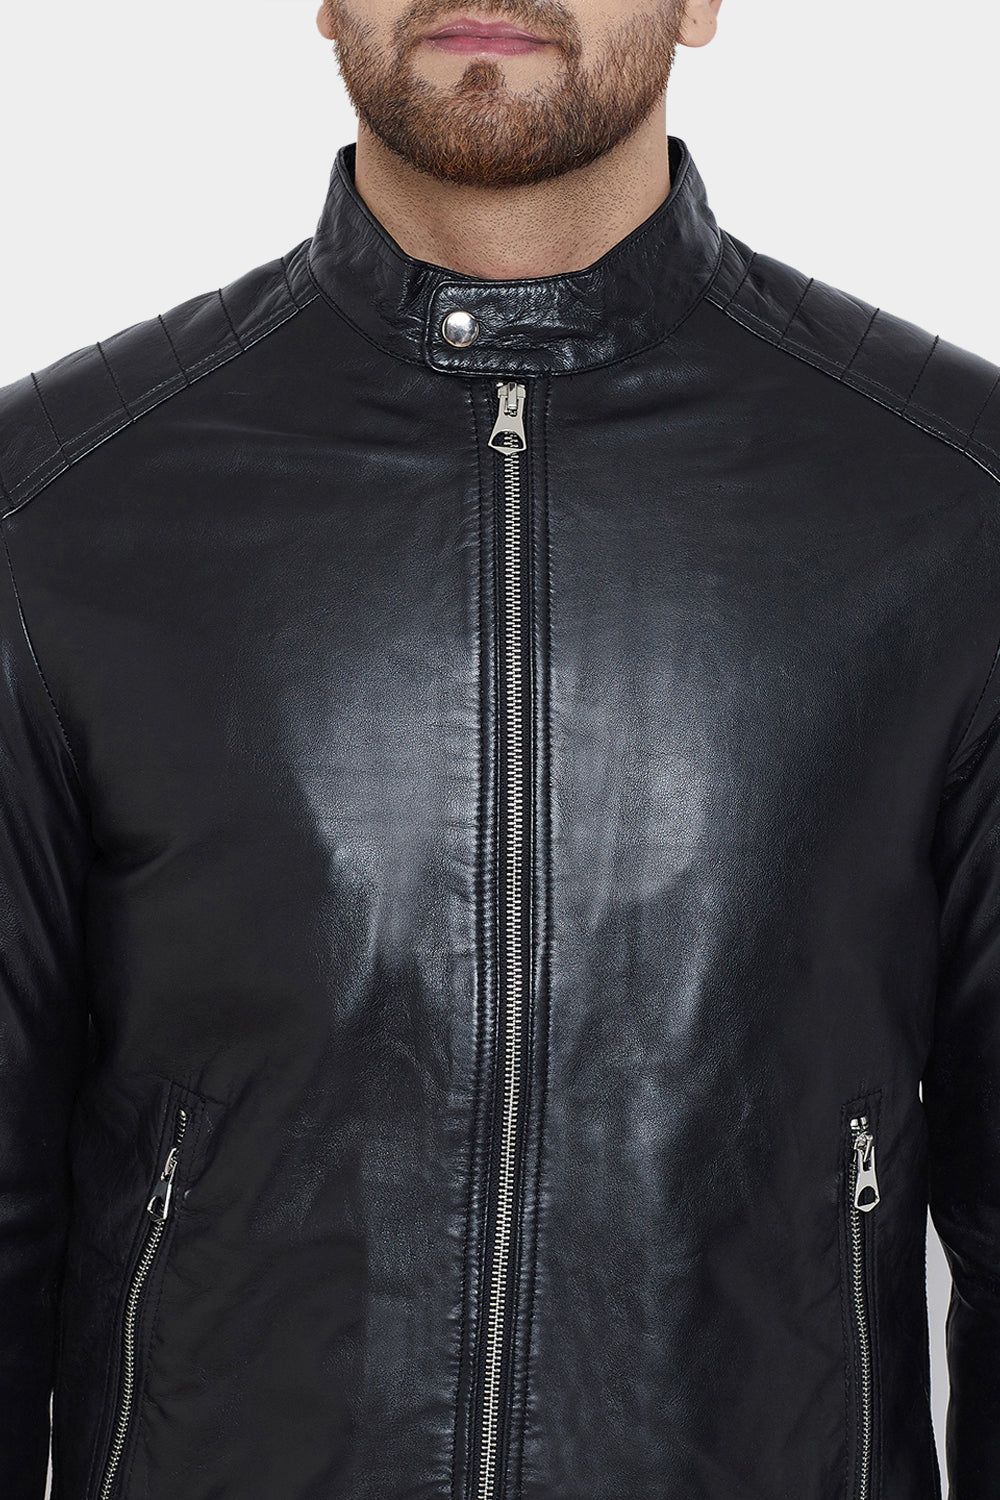 Justanned Real Leather Men Black Jacket